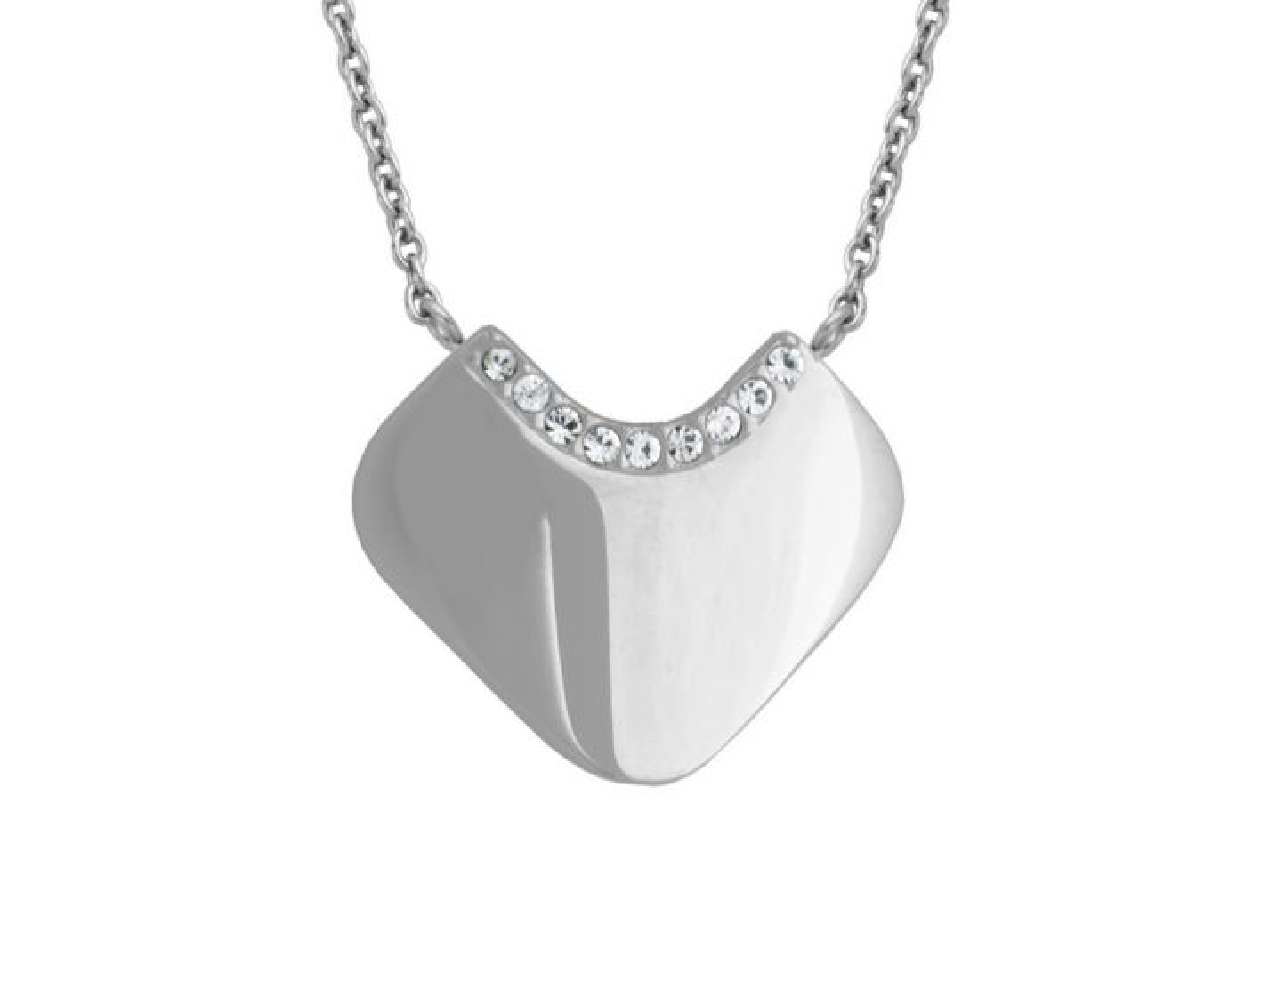 STEELX
Cleopatra Style Heart Necklace
w/ Clea...